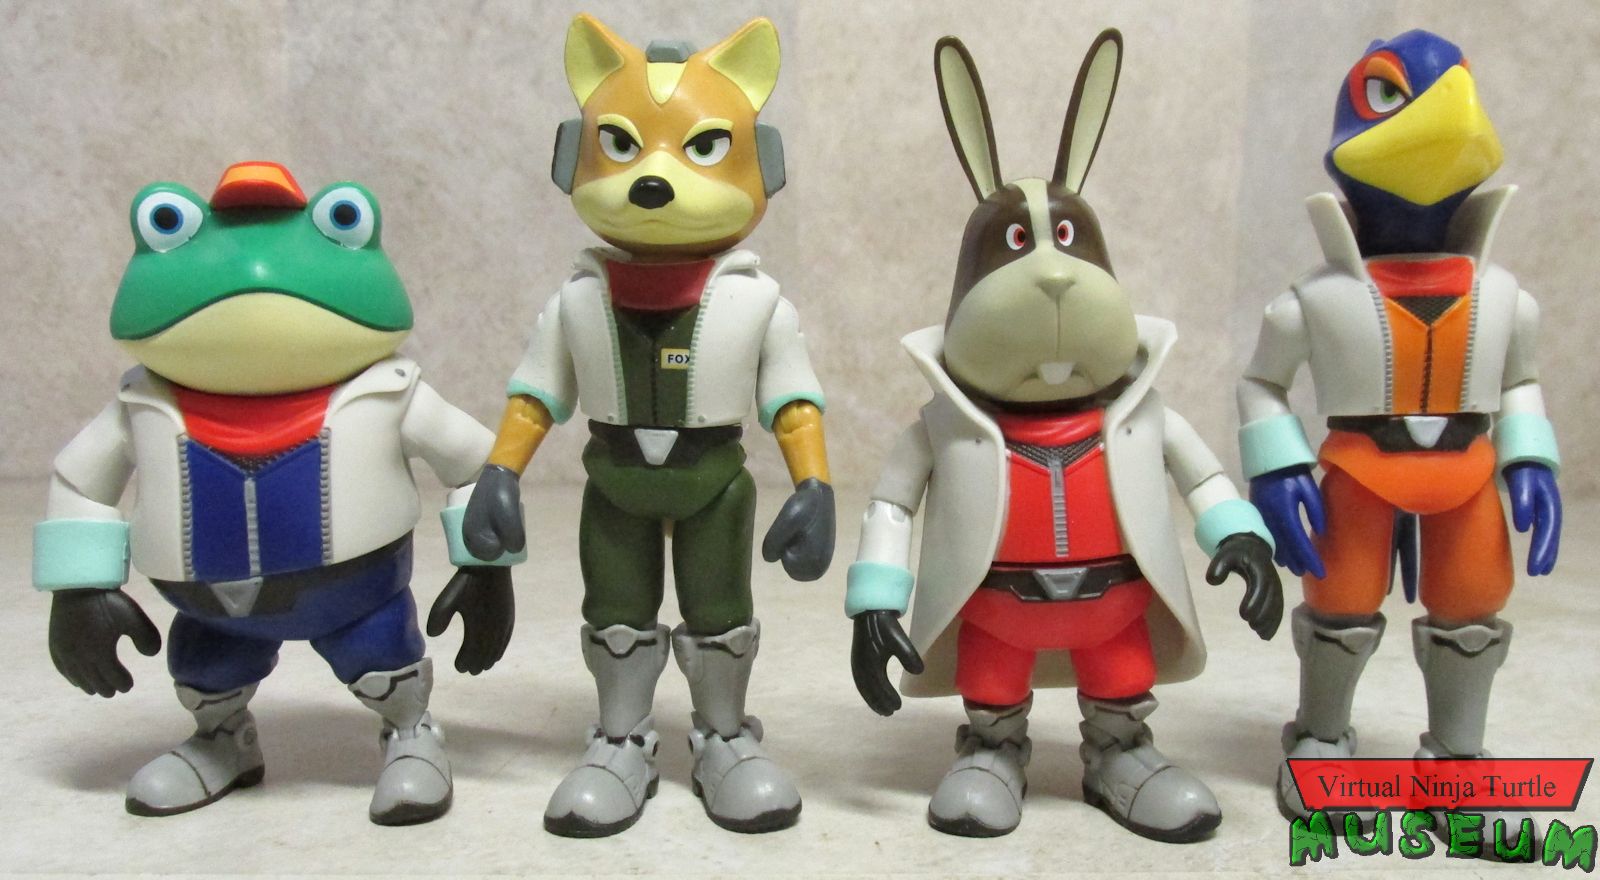 The full Star Fox Team